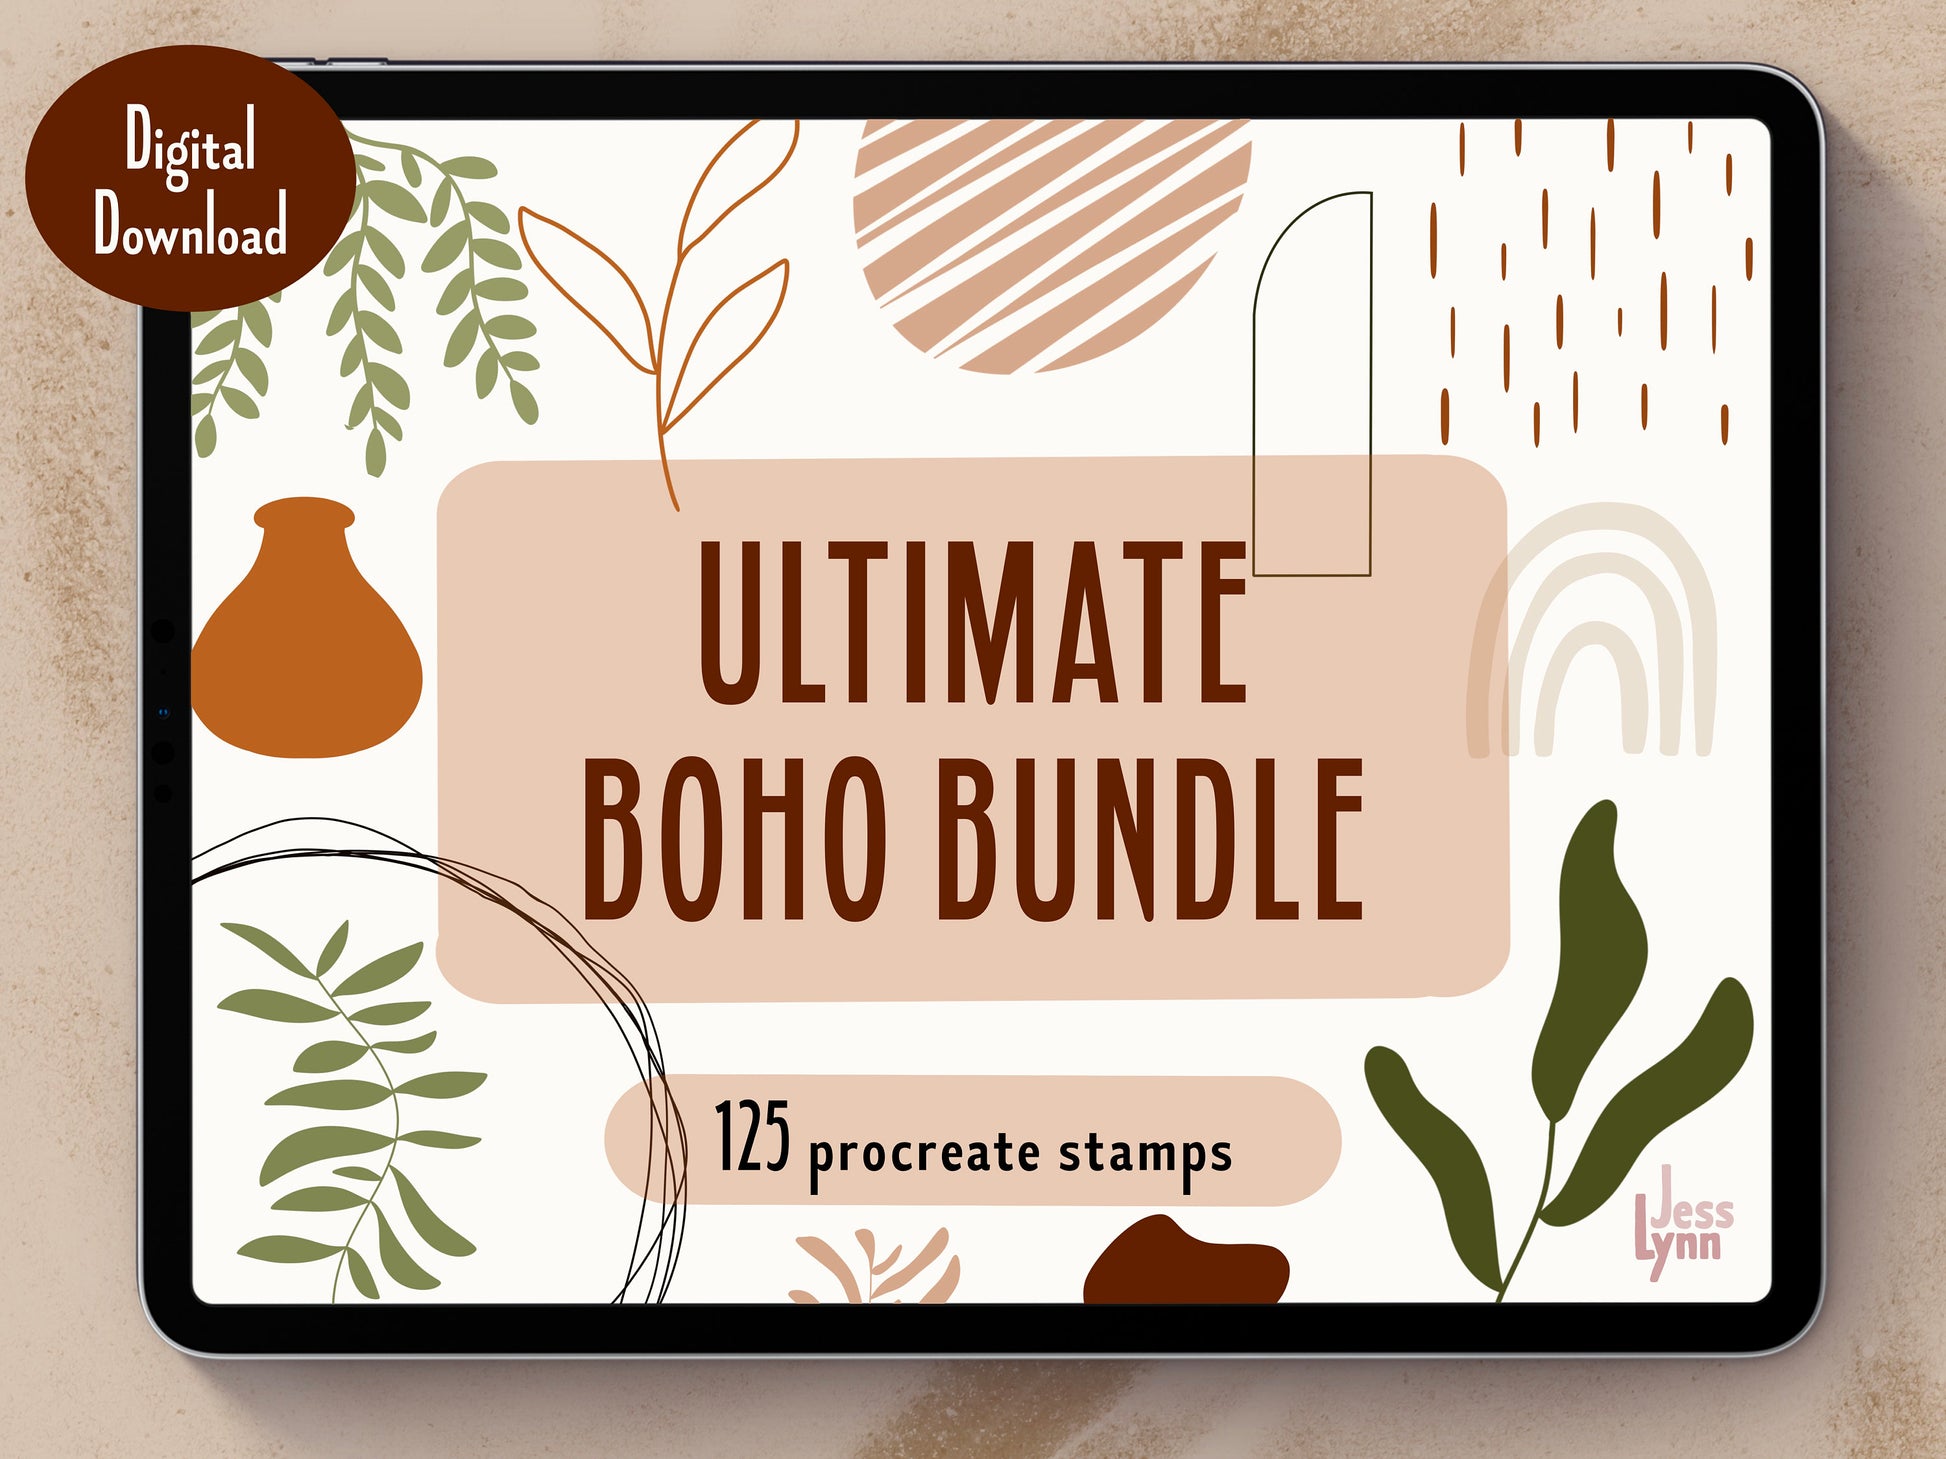 Ultimate Boho Procreate Stamps